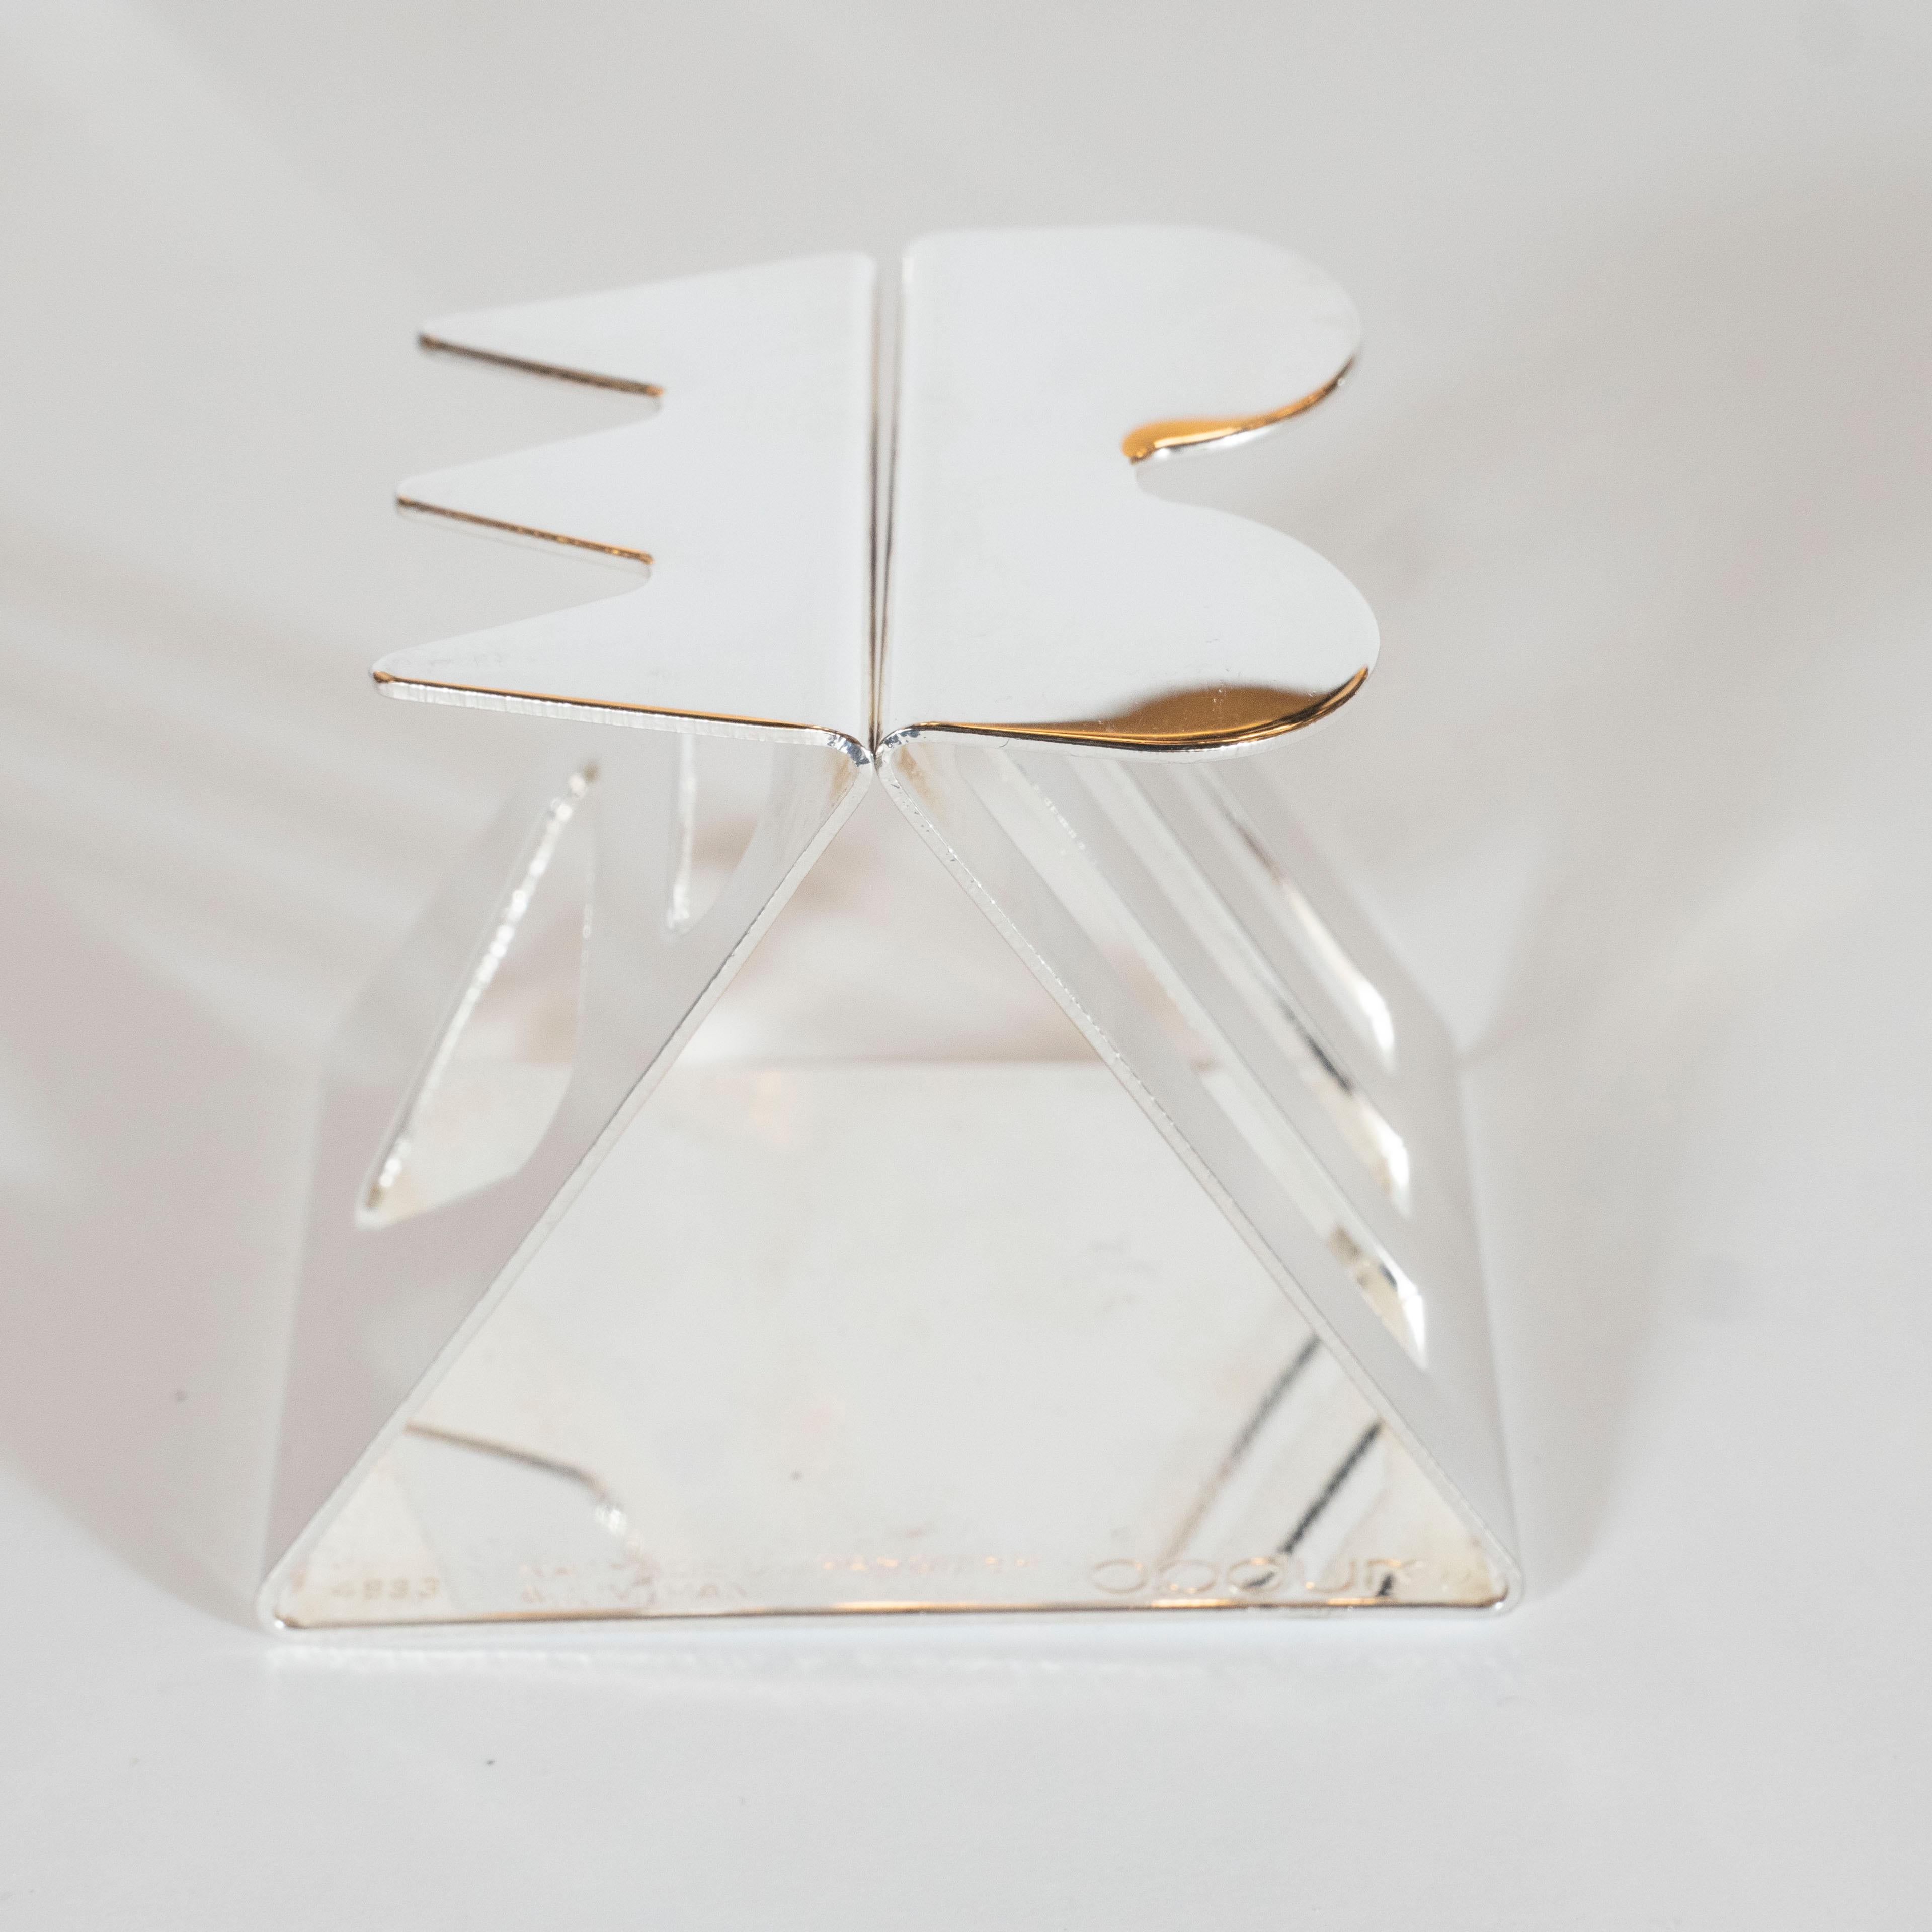 Modernist Memphis Silverplate Napkin Rings by Nathalie du Pasquier for Bodum 3